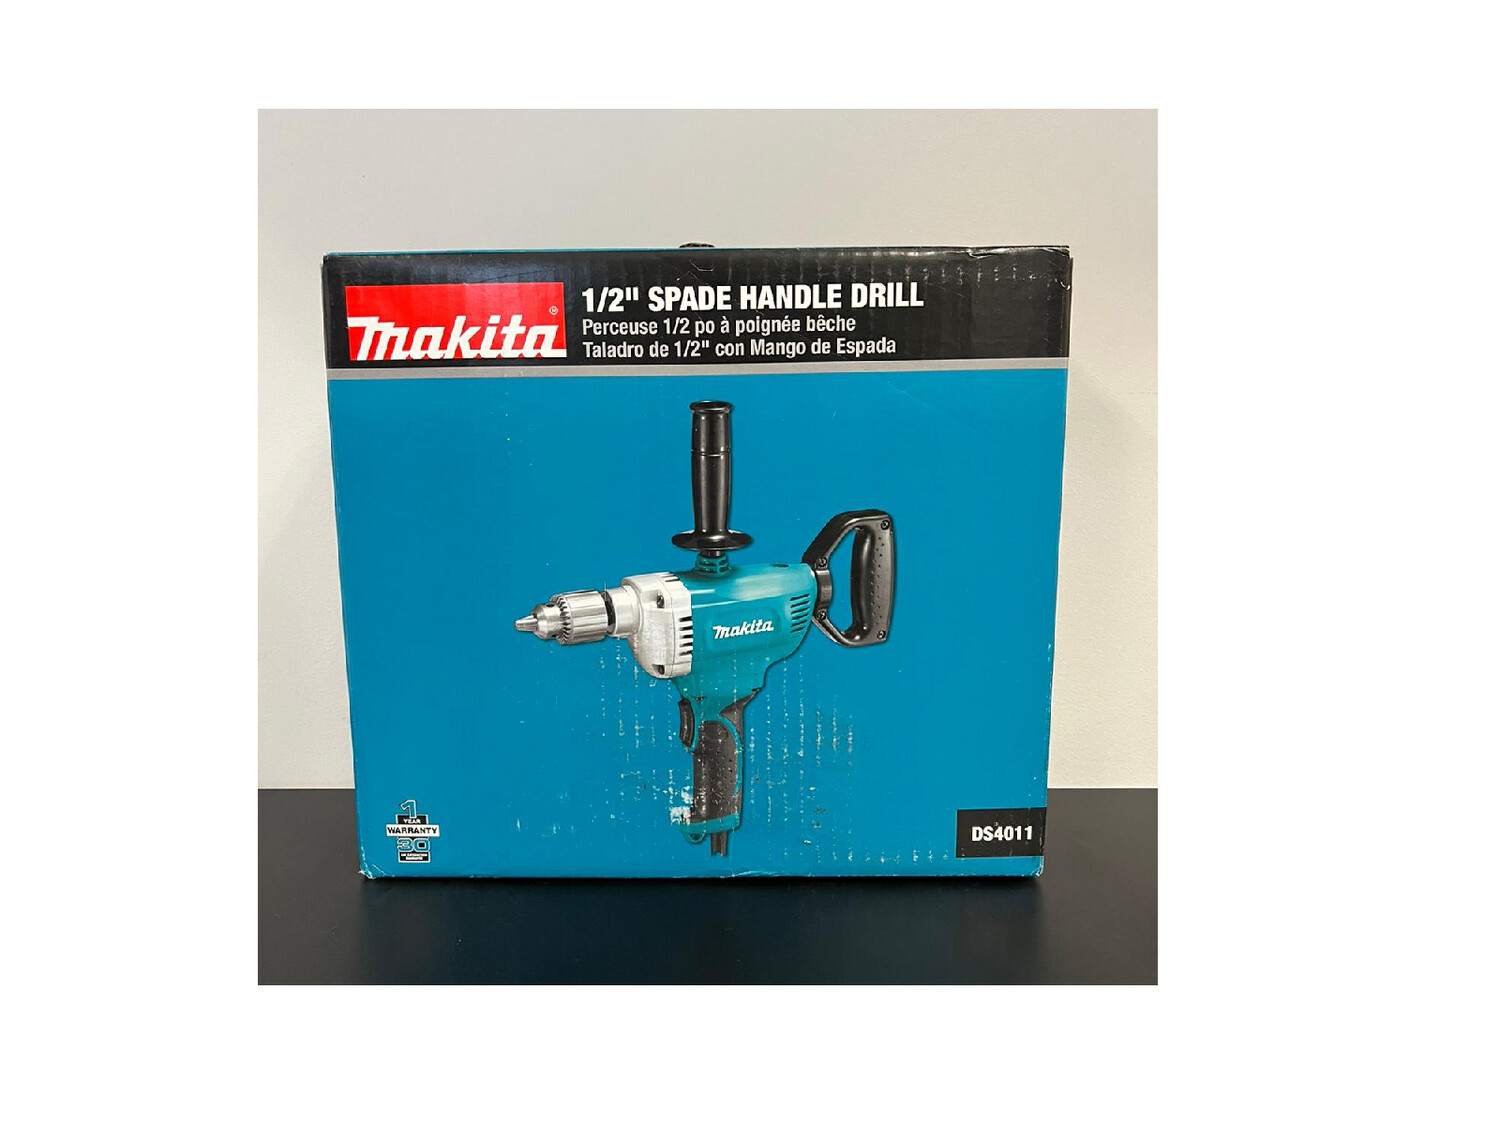 Makita 8.5 Amp 1/2" Spade Handle Drill